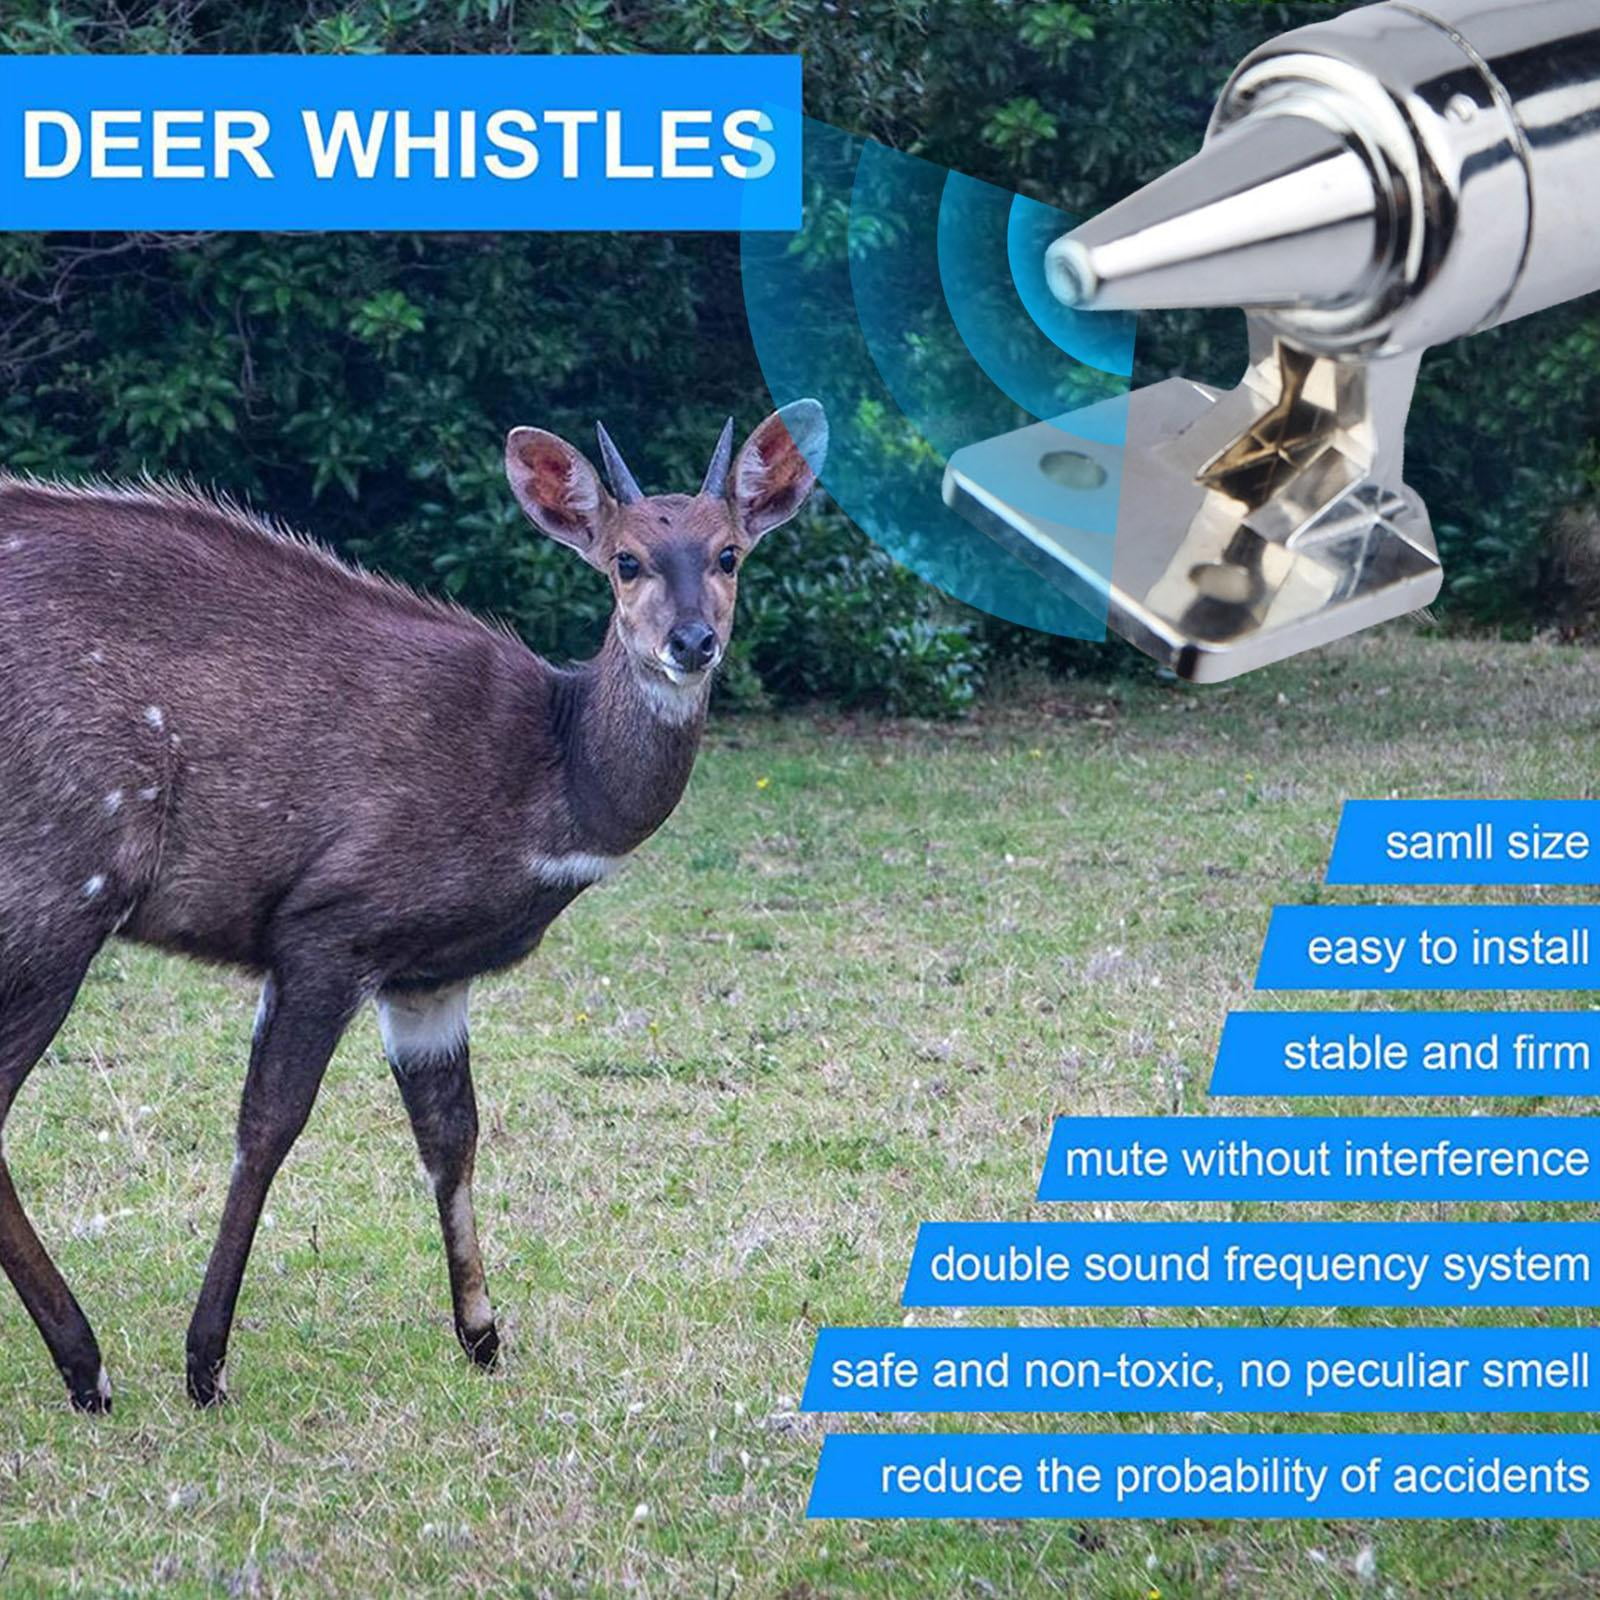 2 PAIR CAR Whistle Warning Animal Deer Kangaroo Repeller Portable Safety  Device $12.35 - PicClick AU